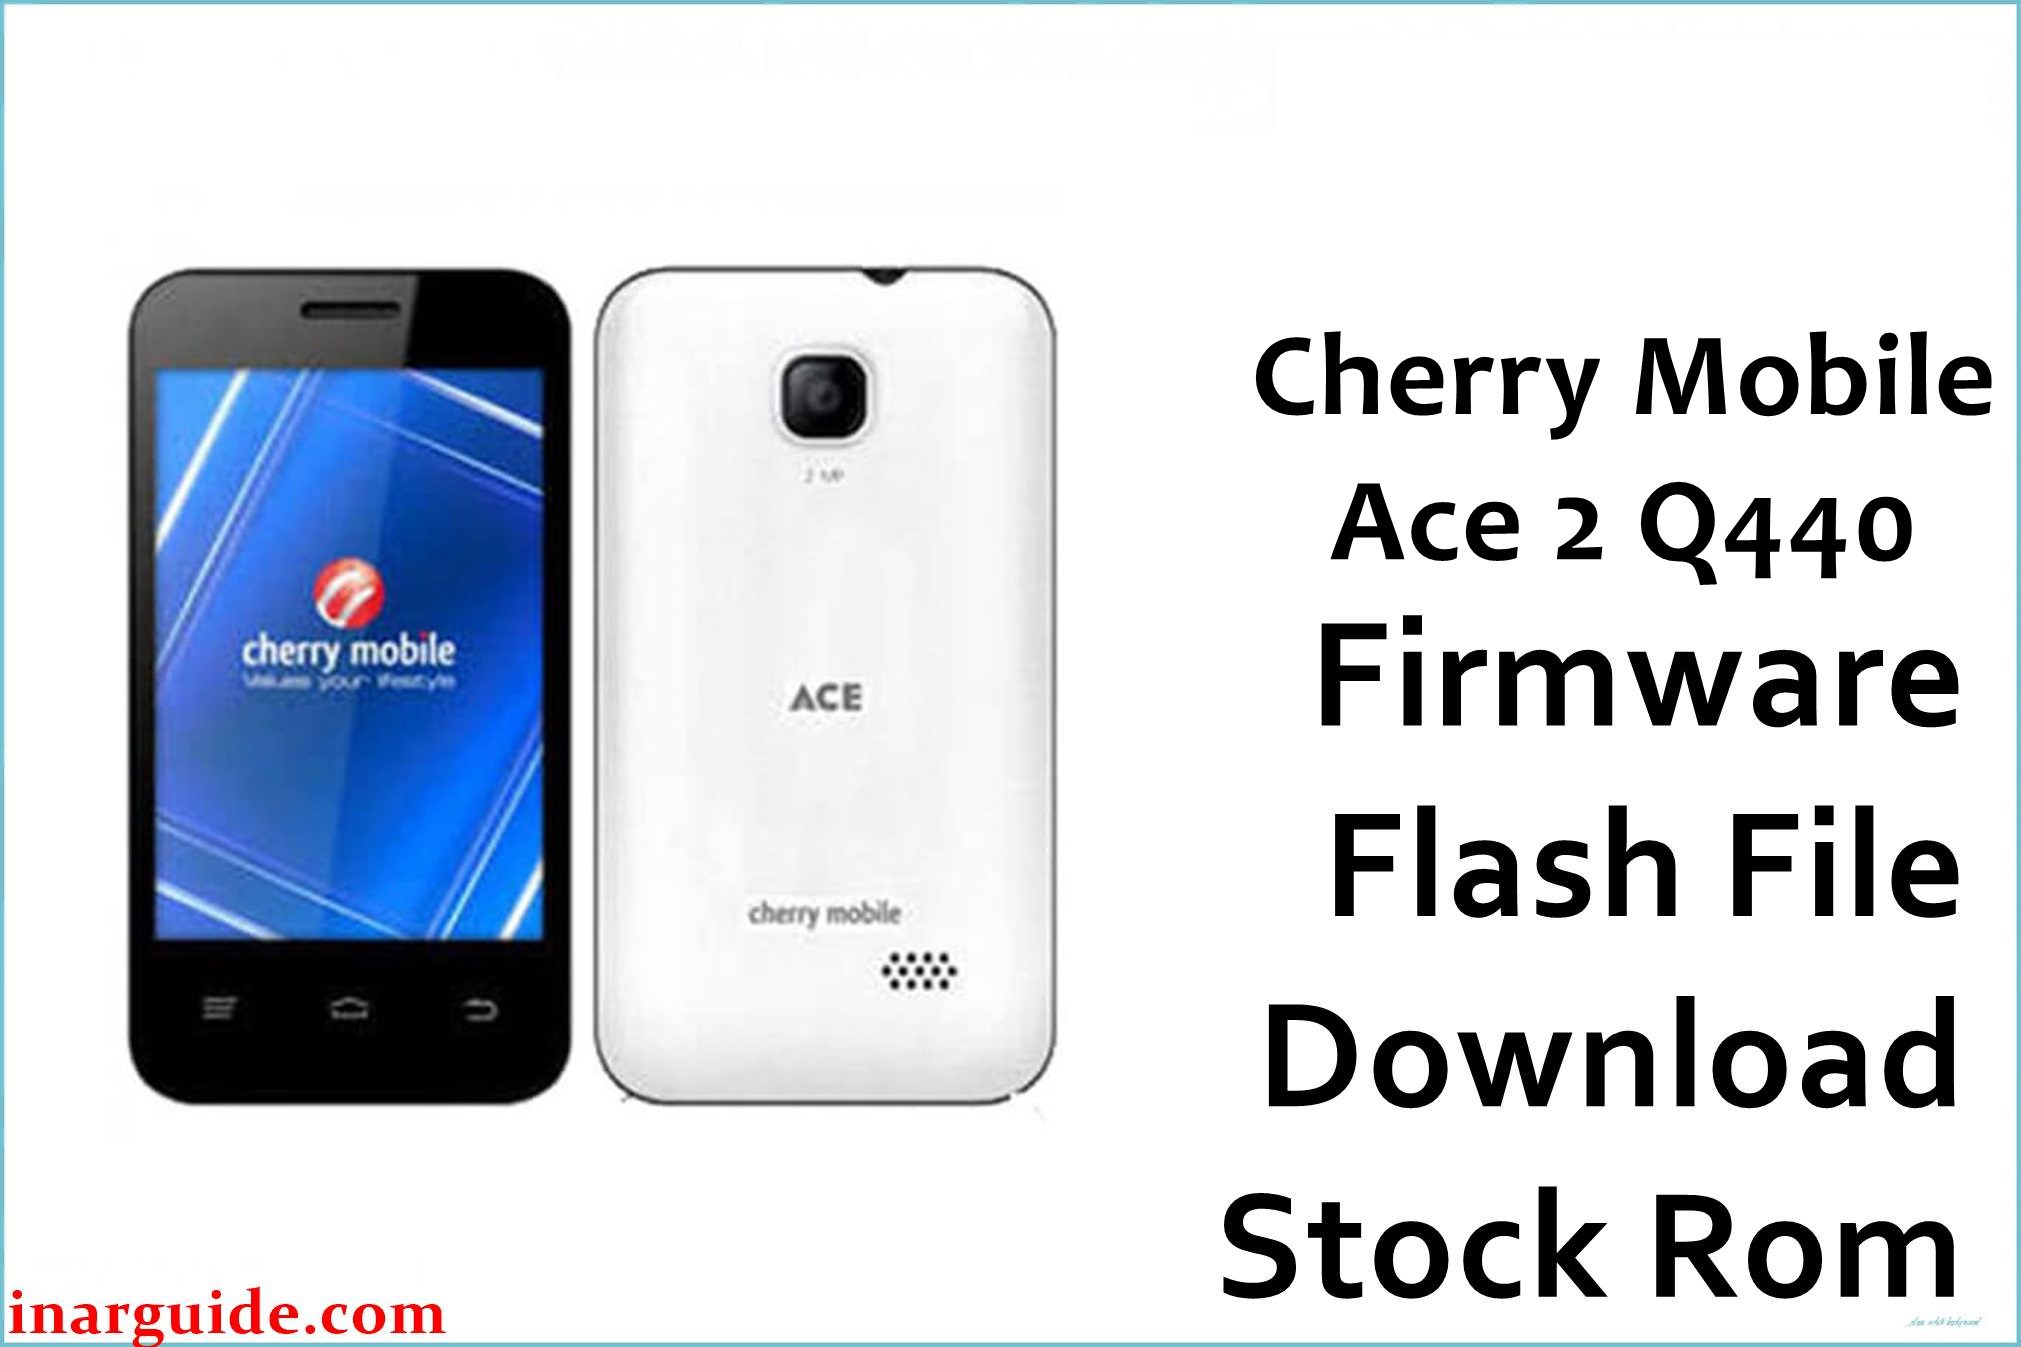 Cherry Mobile Ace 2 Q440